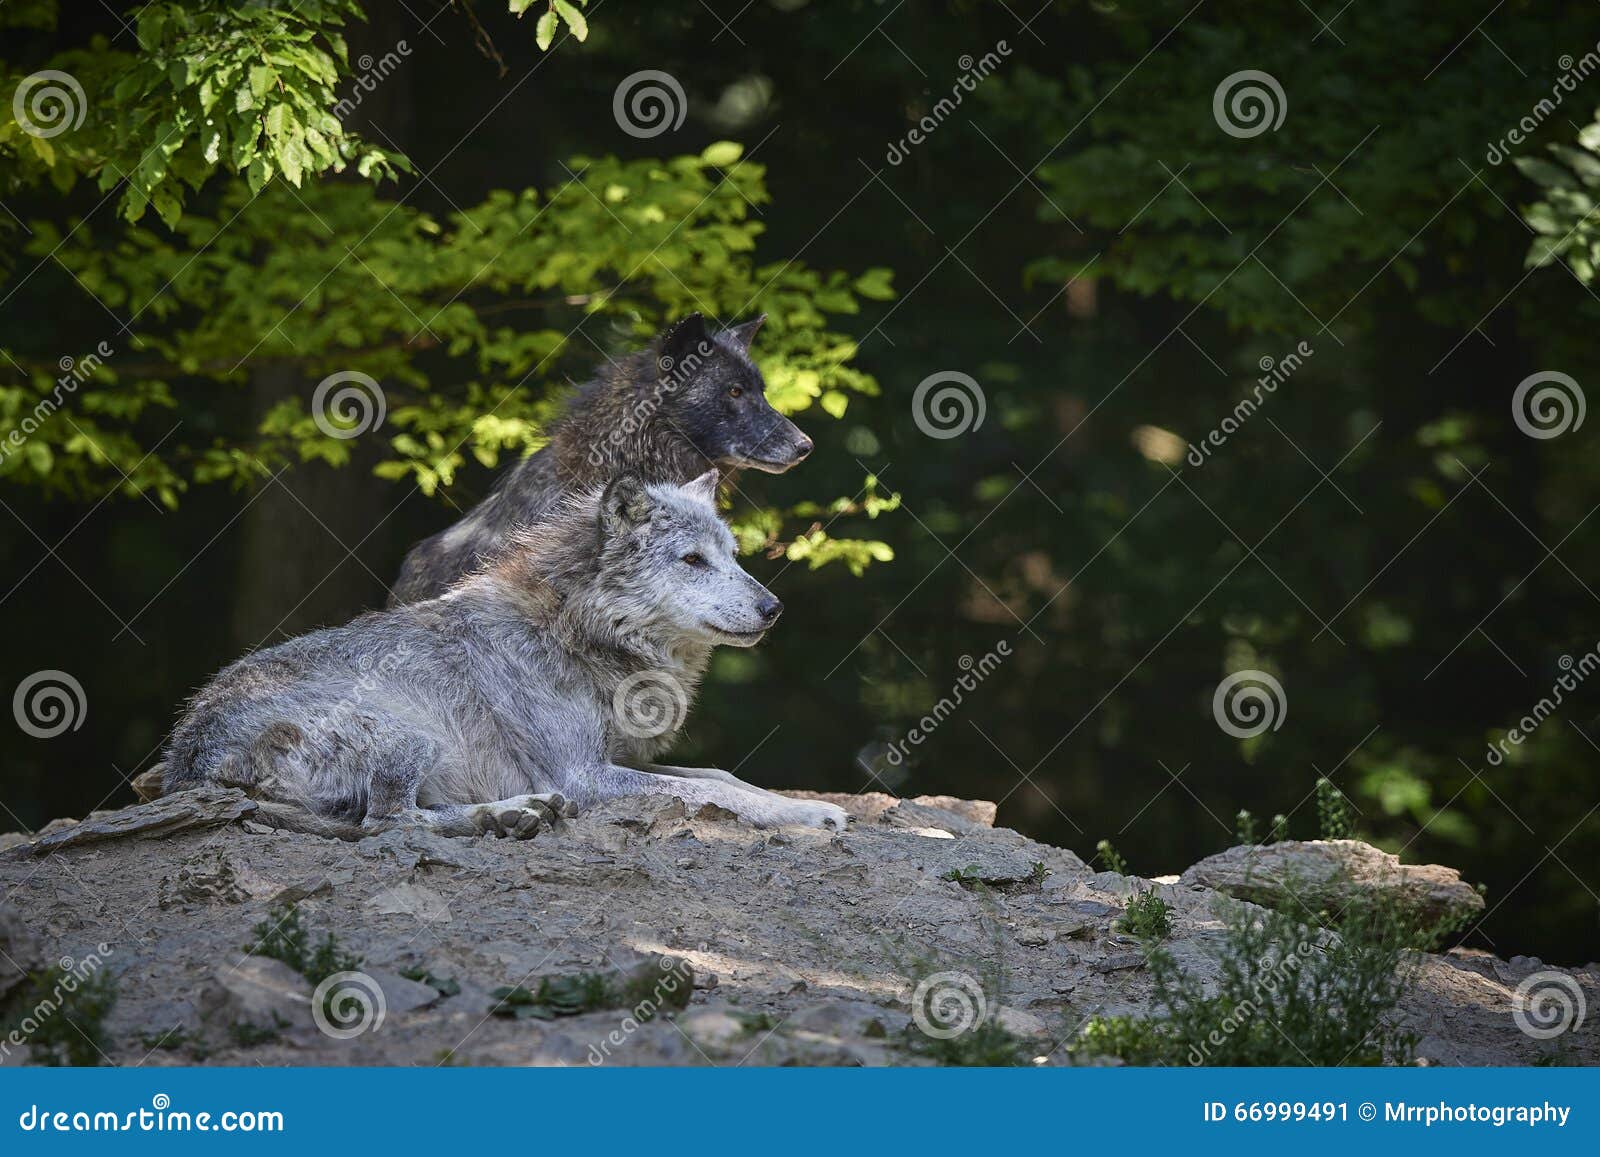 portrait of a timberwolf